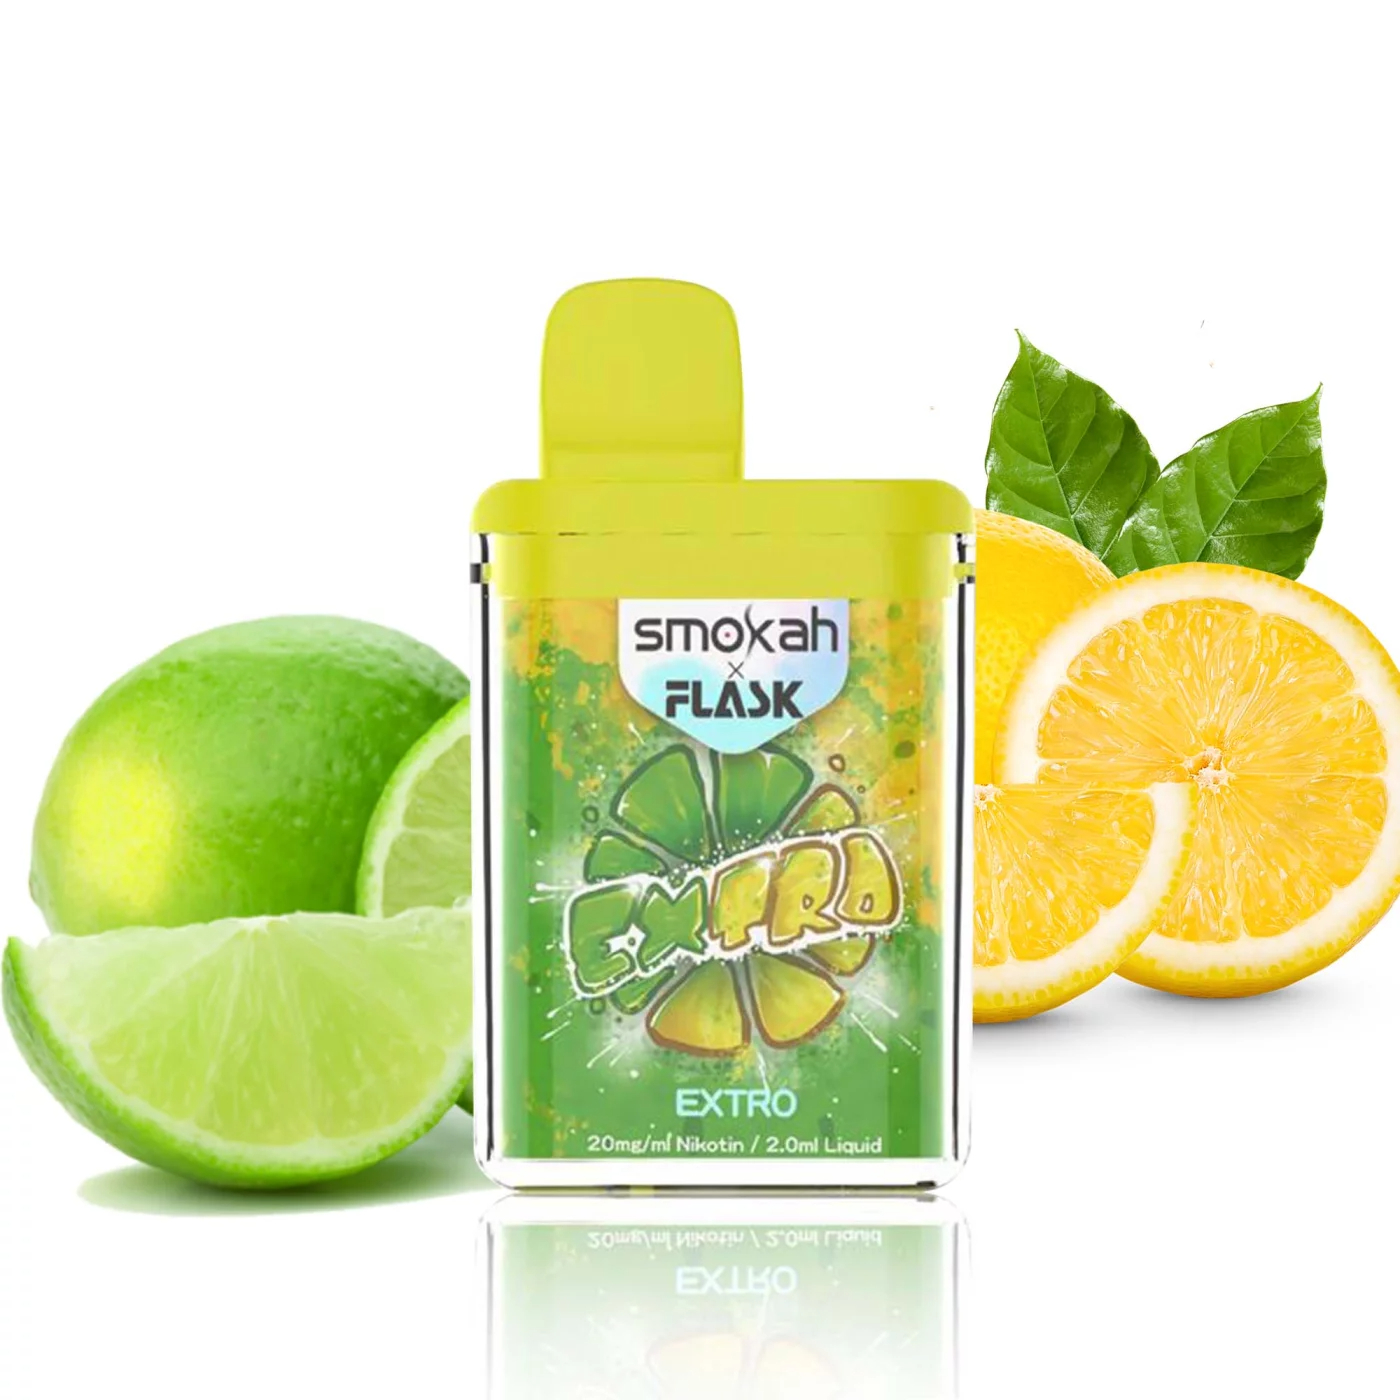 Smokah x Flask Pocket - Einweg E-Shisha - EXTRO 2% Nikotin